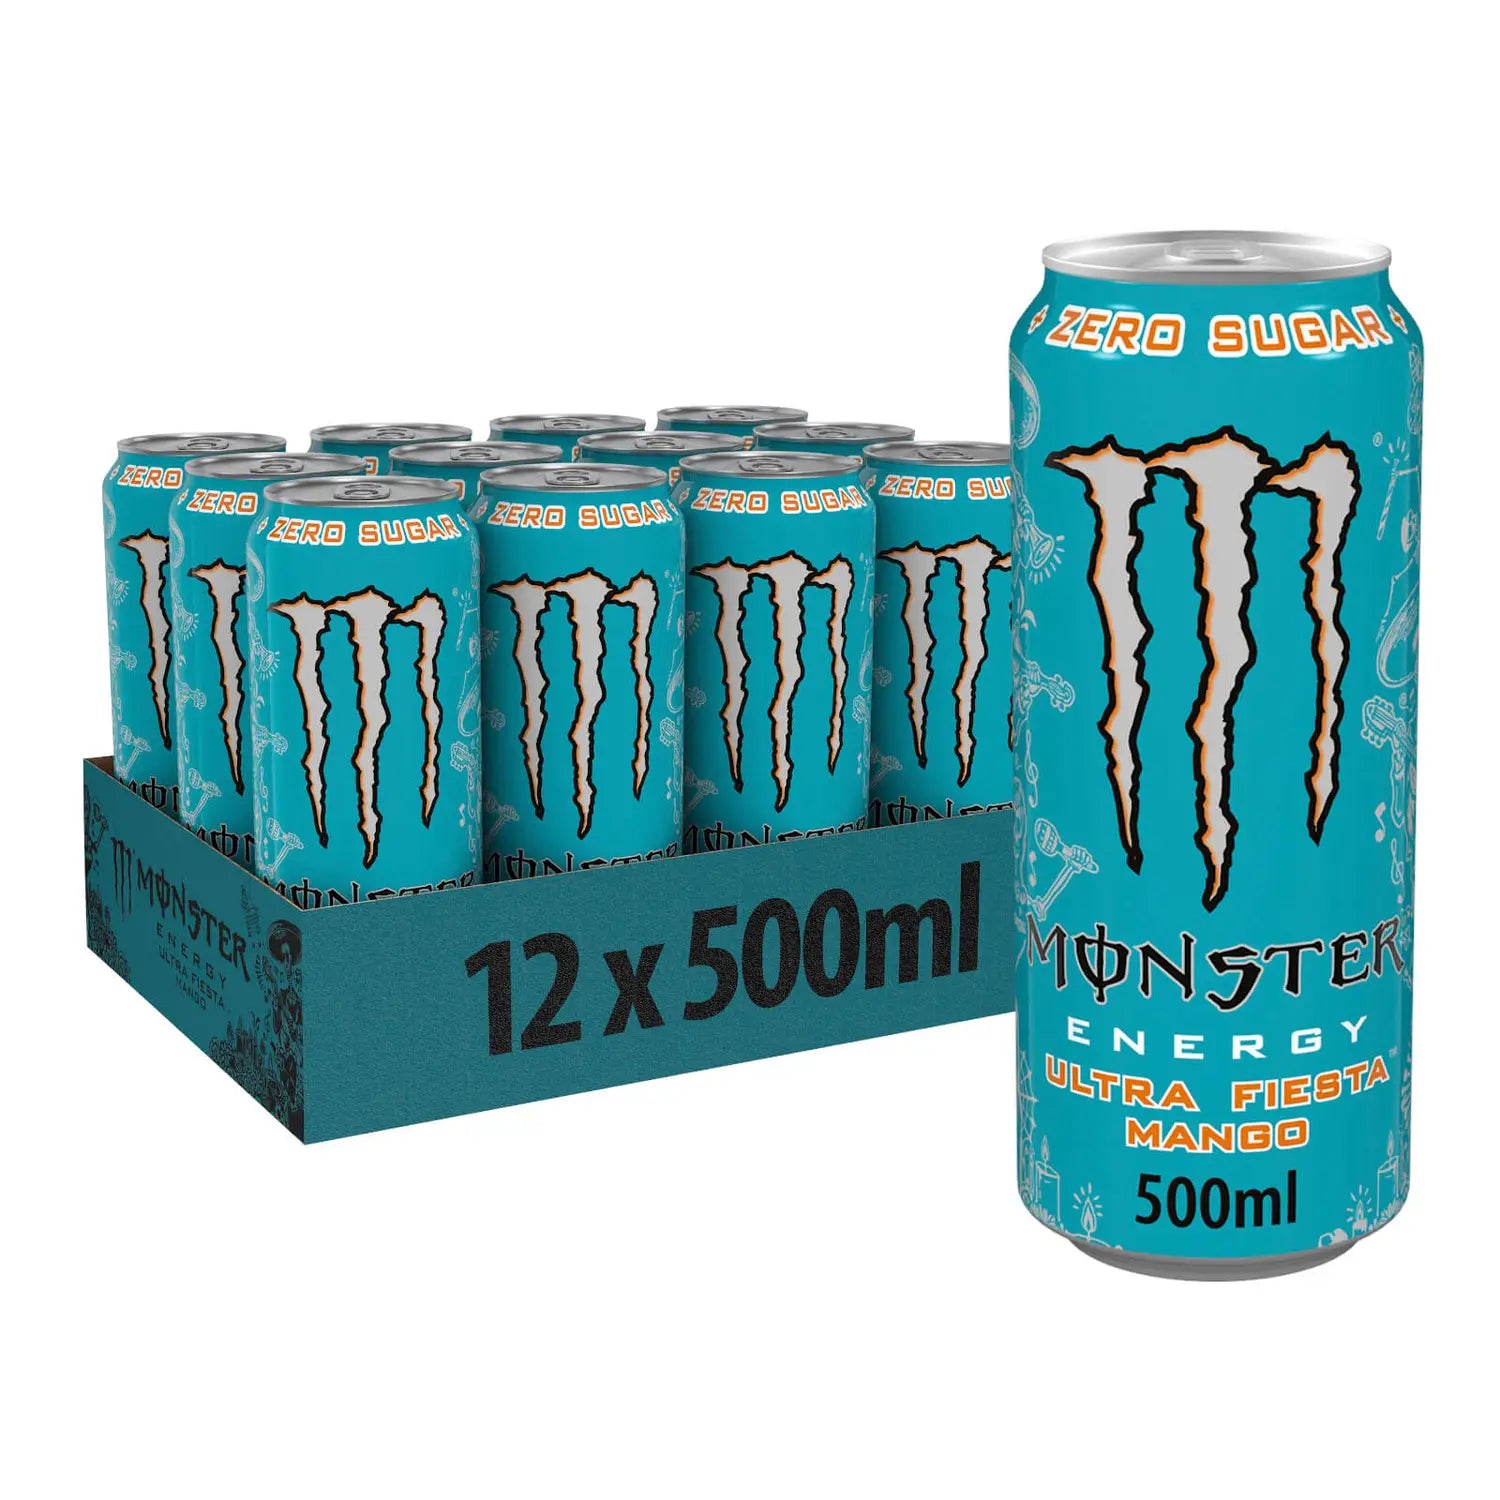 Monster Energy Drink Ultra Fiesta Mango 12x500ml (Shipping Restricted)